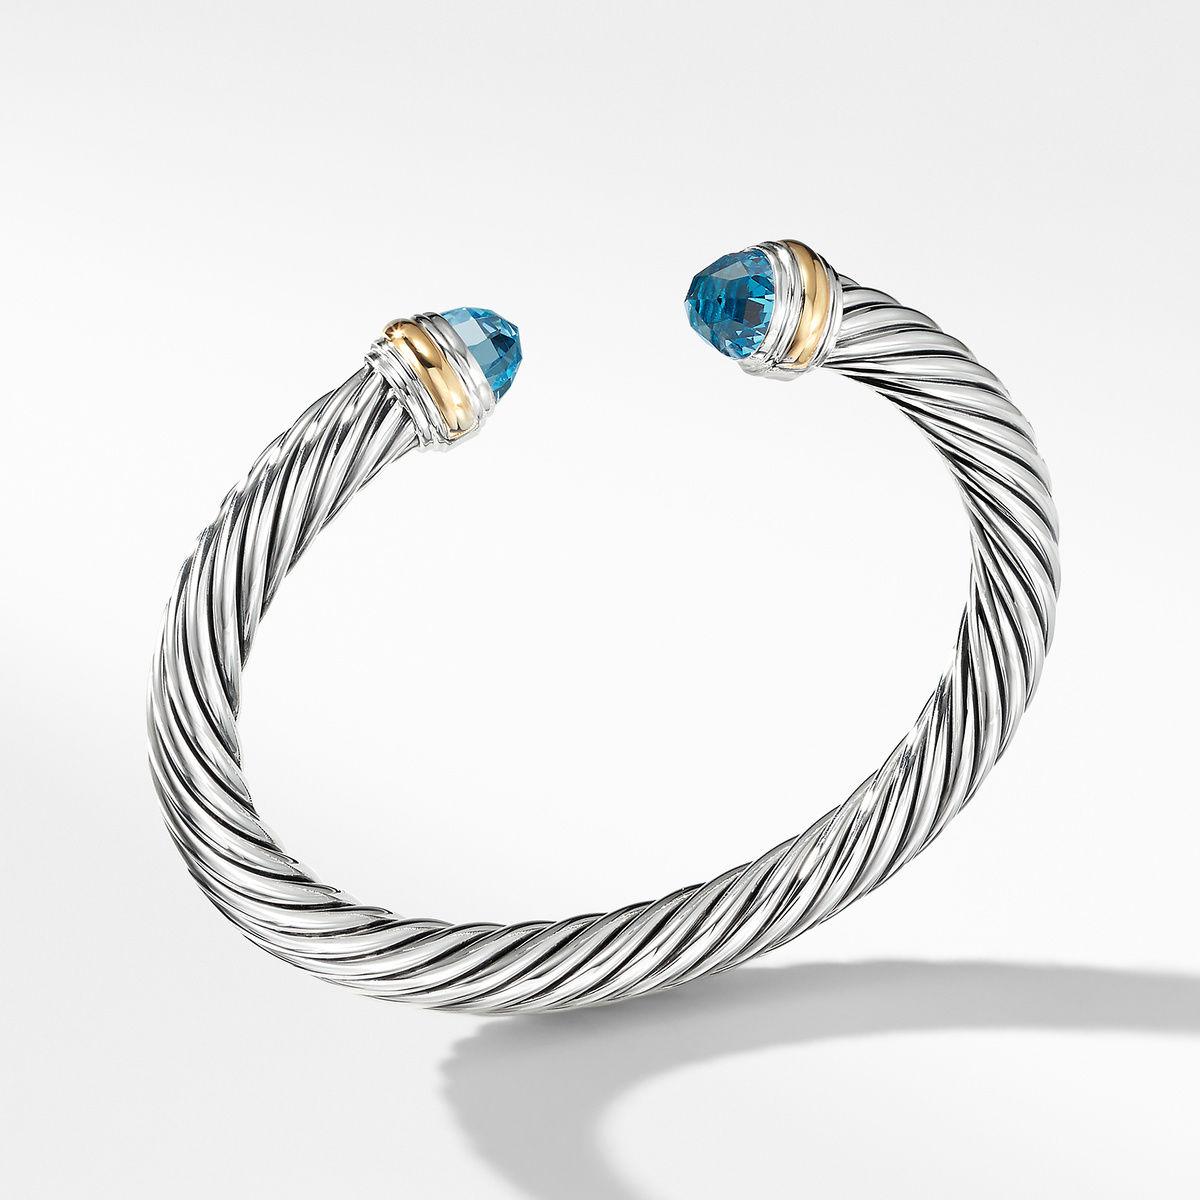 David Yurman Cable Bracelet with blue topaz B04425 S4ABTM

Size Medium